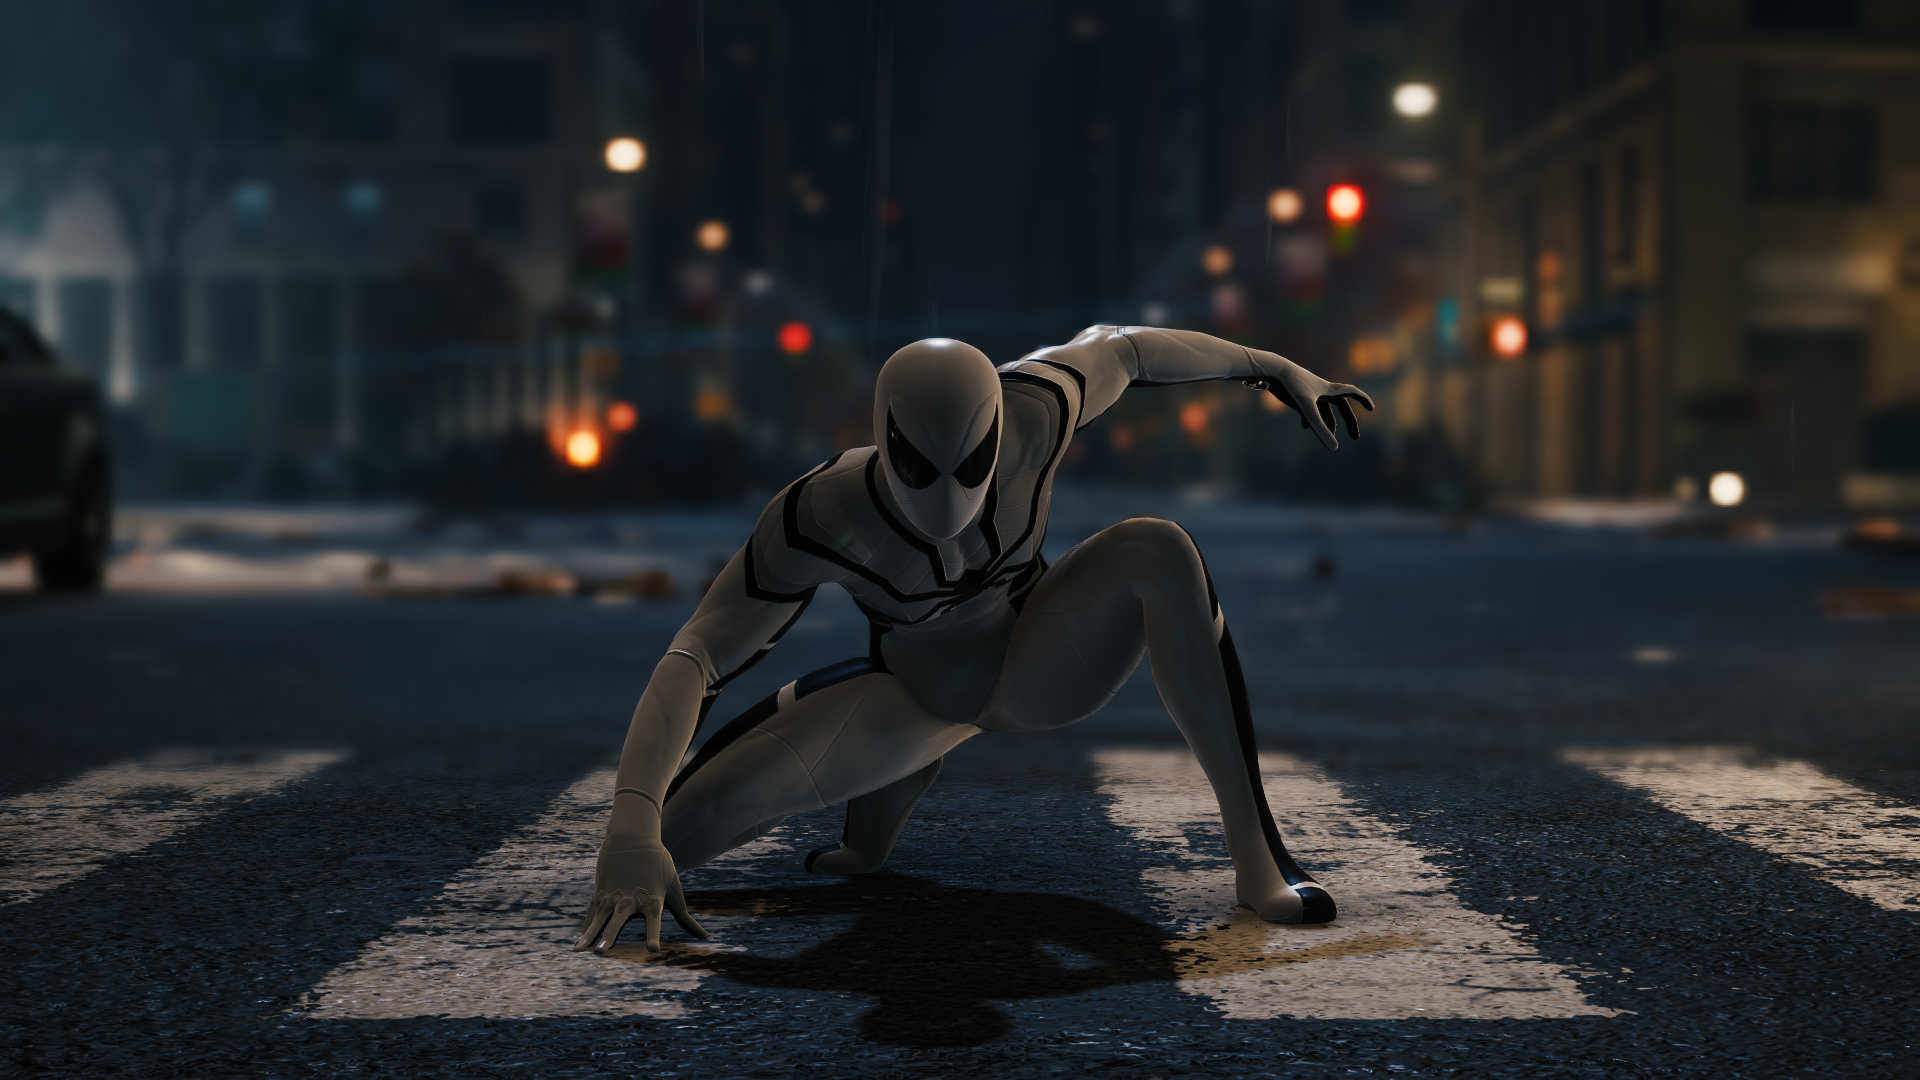 Spider Man Marvel Comics Superhero Peter Parker Insomniac Games Video Games CGi PlayStation 4 Playst 1920x1080